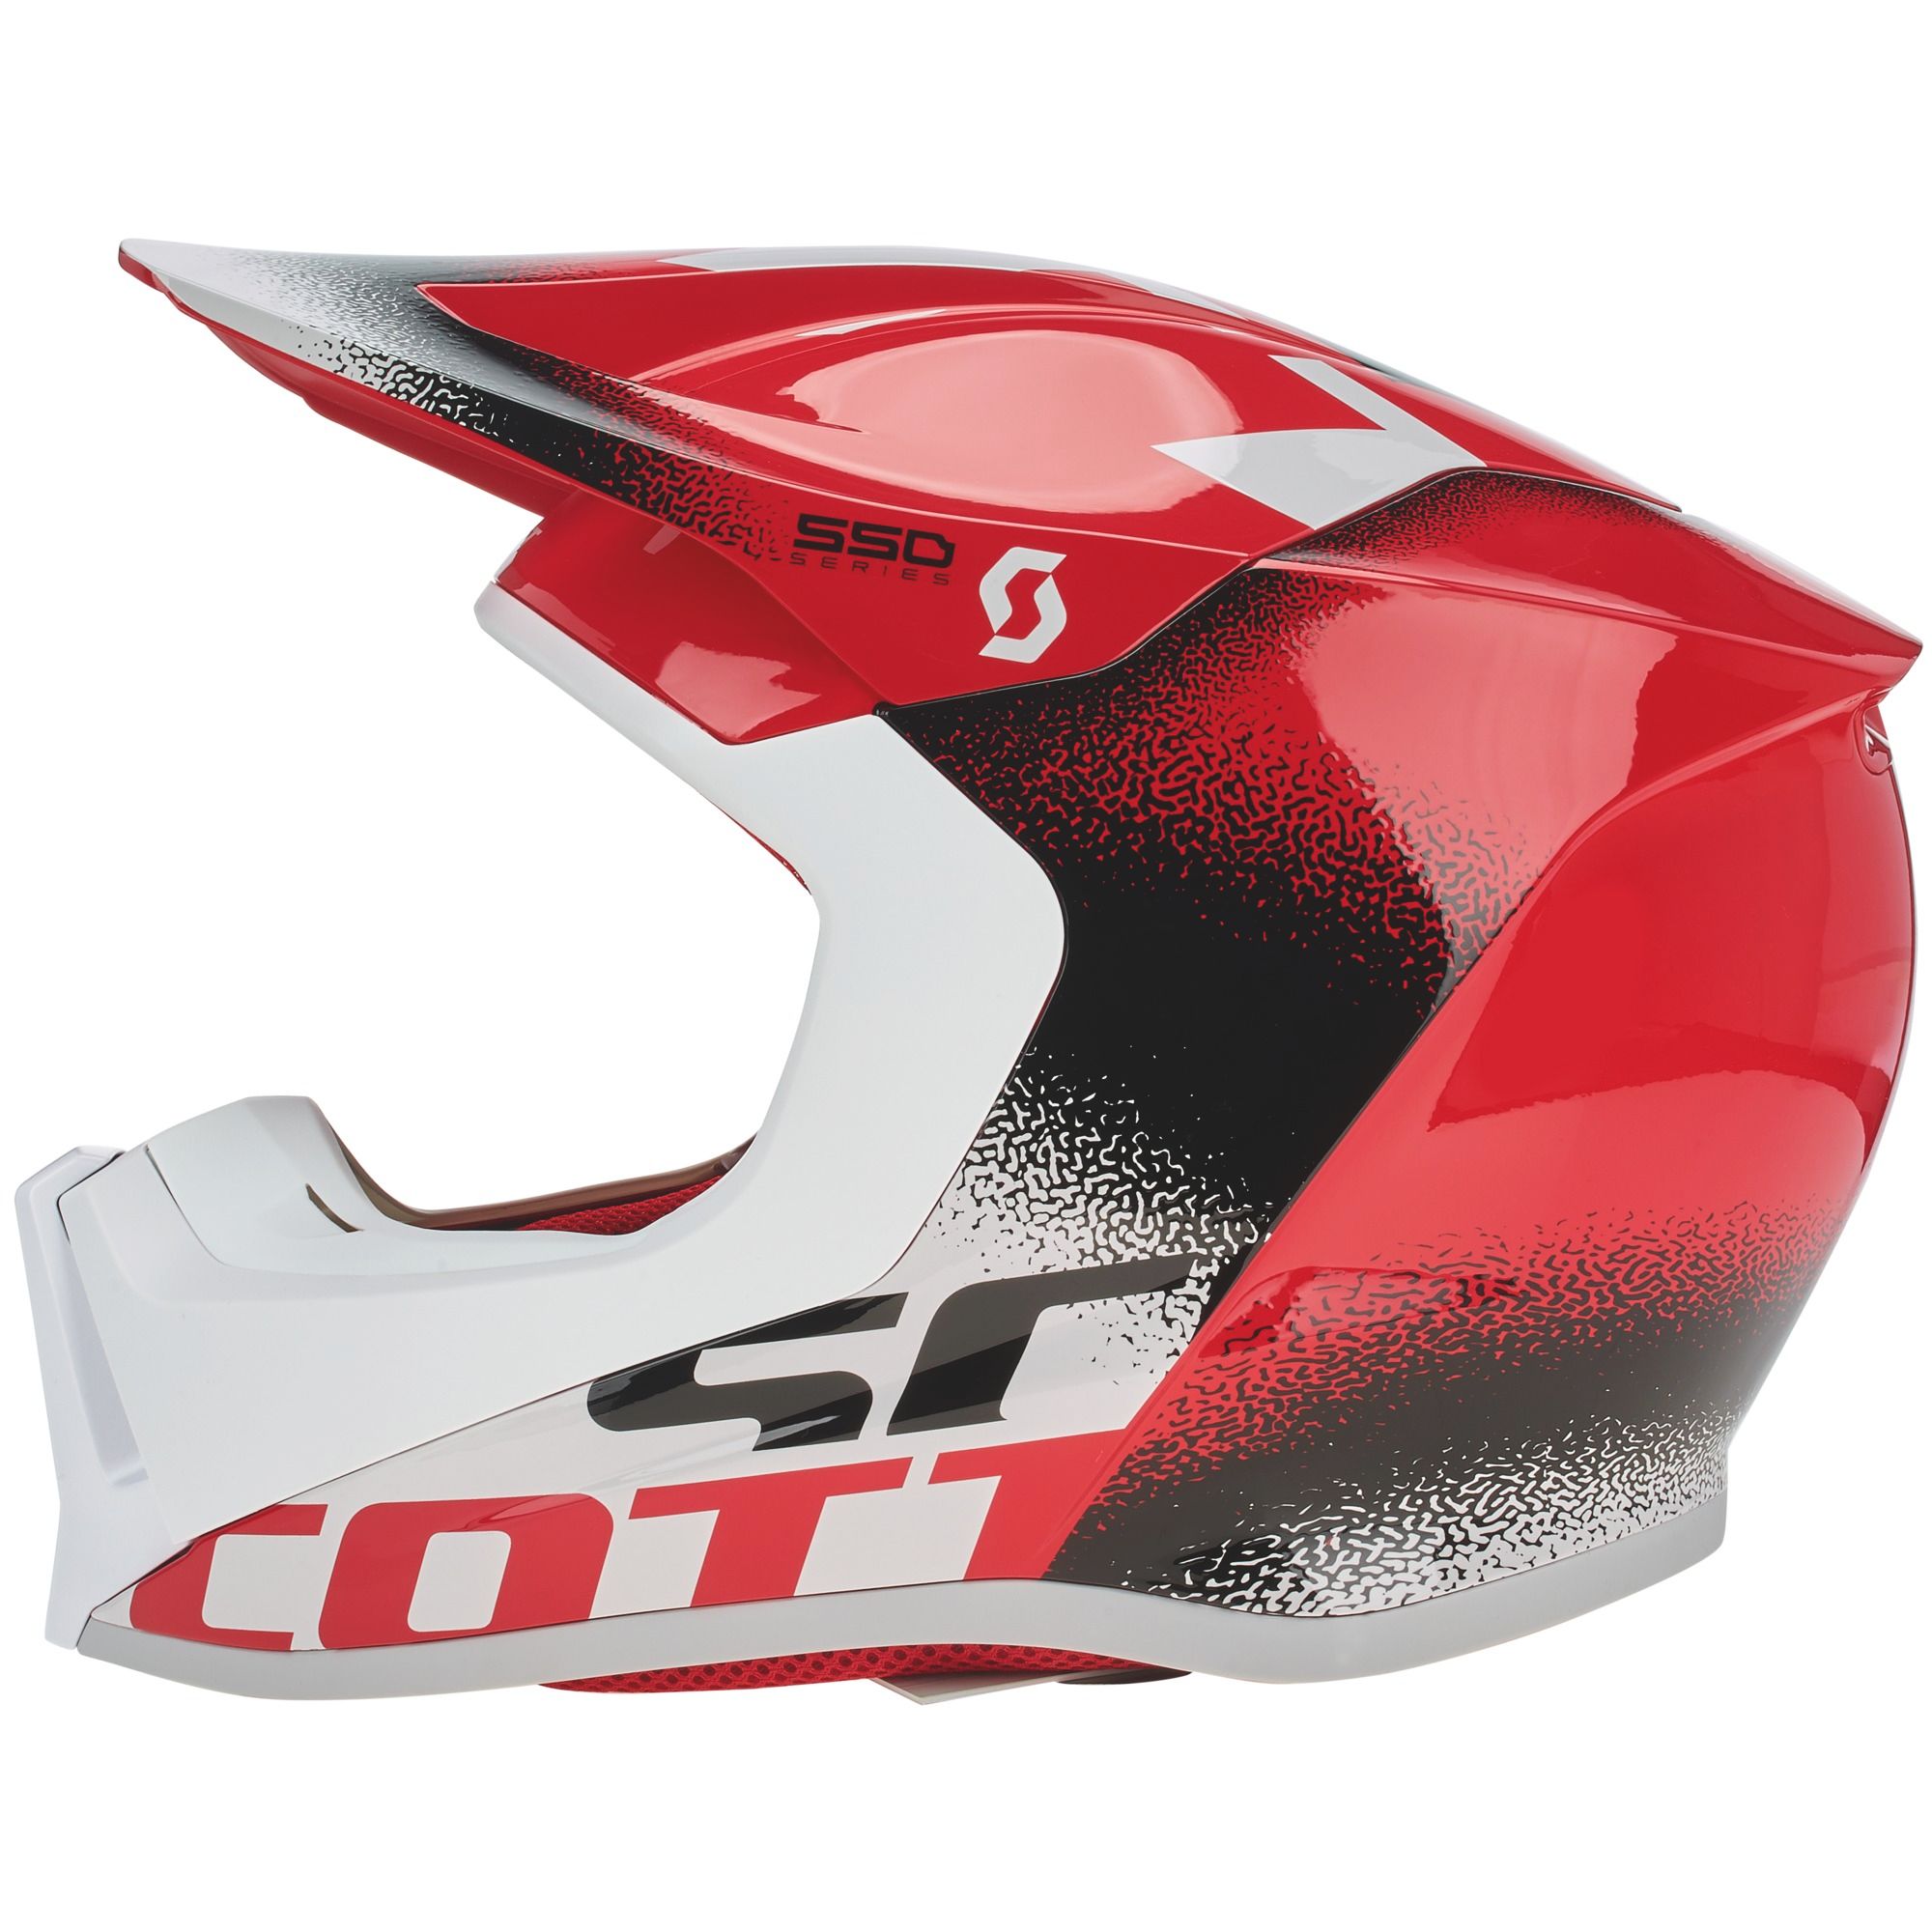 Marco de referencia Fielmente ornamento SCOTT 550 Noise ECE Helmet